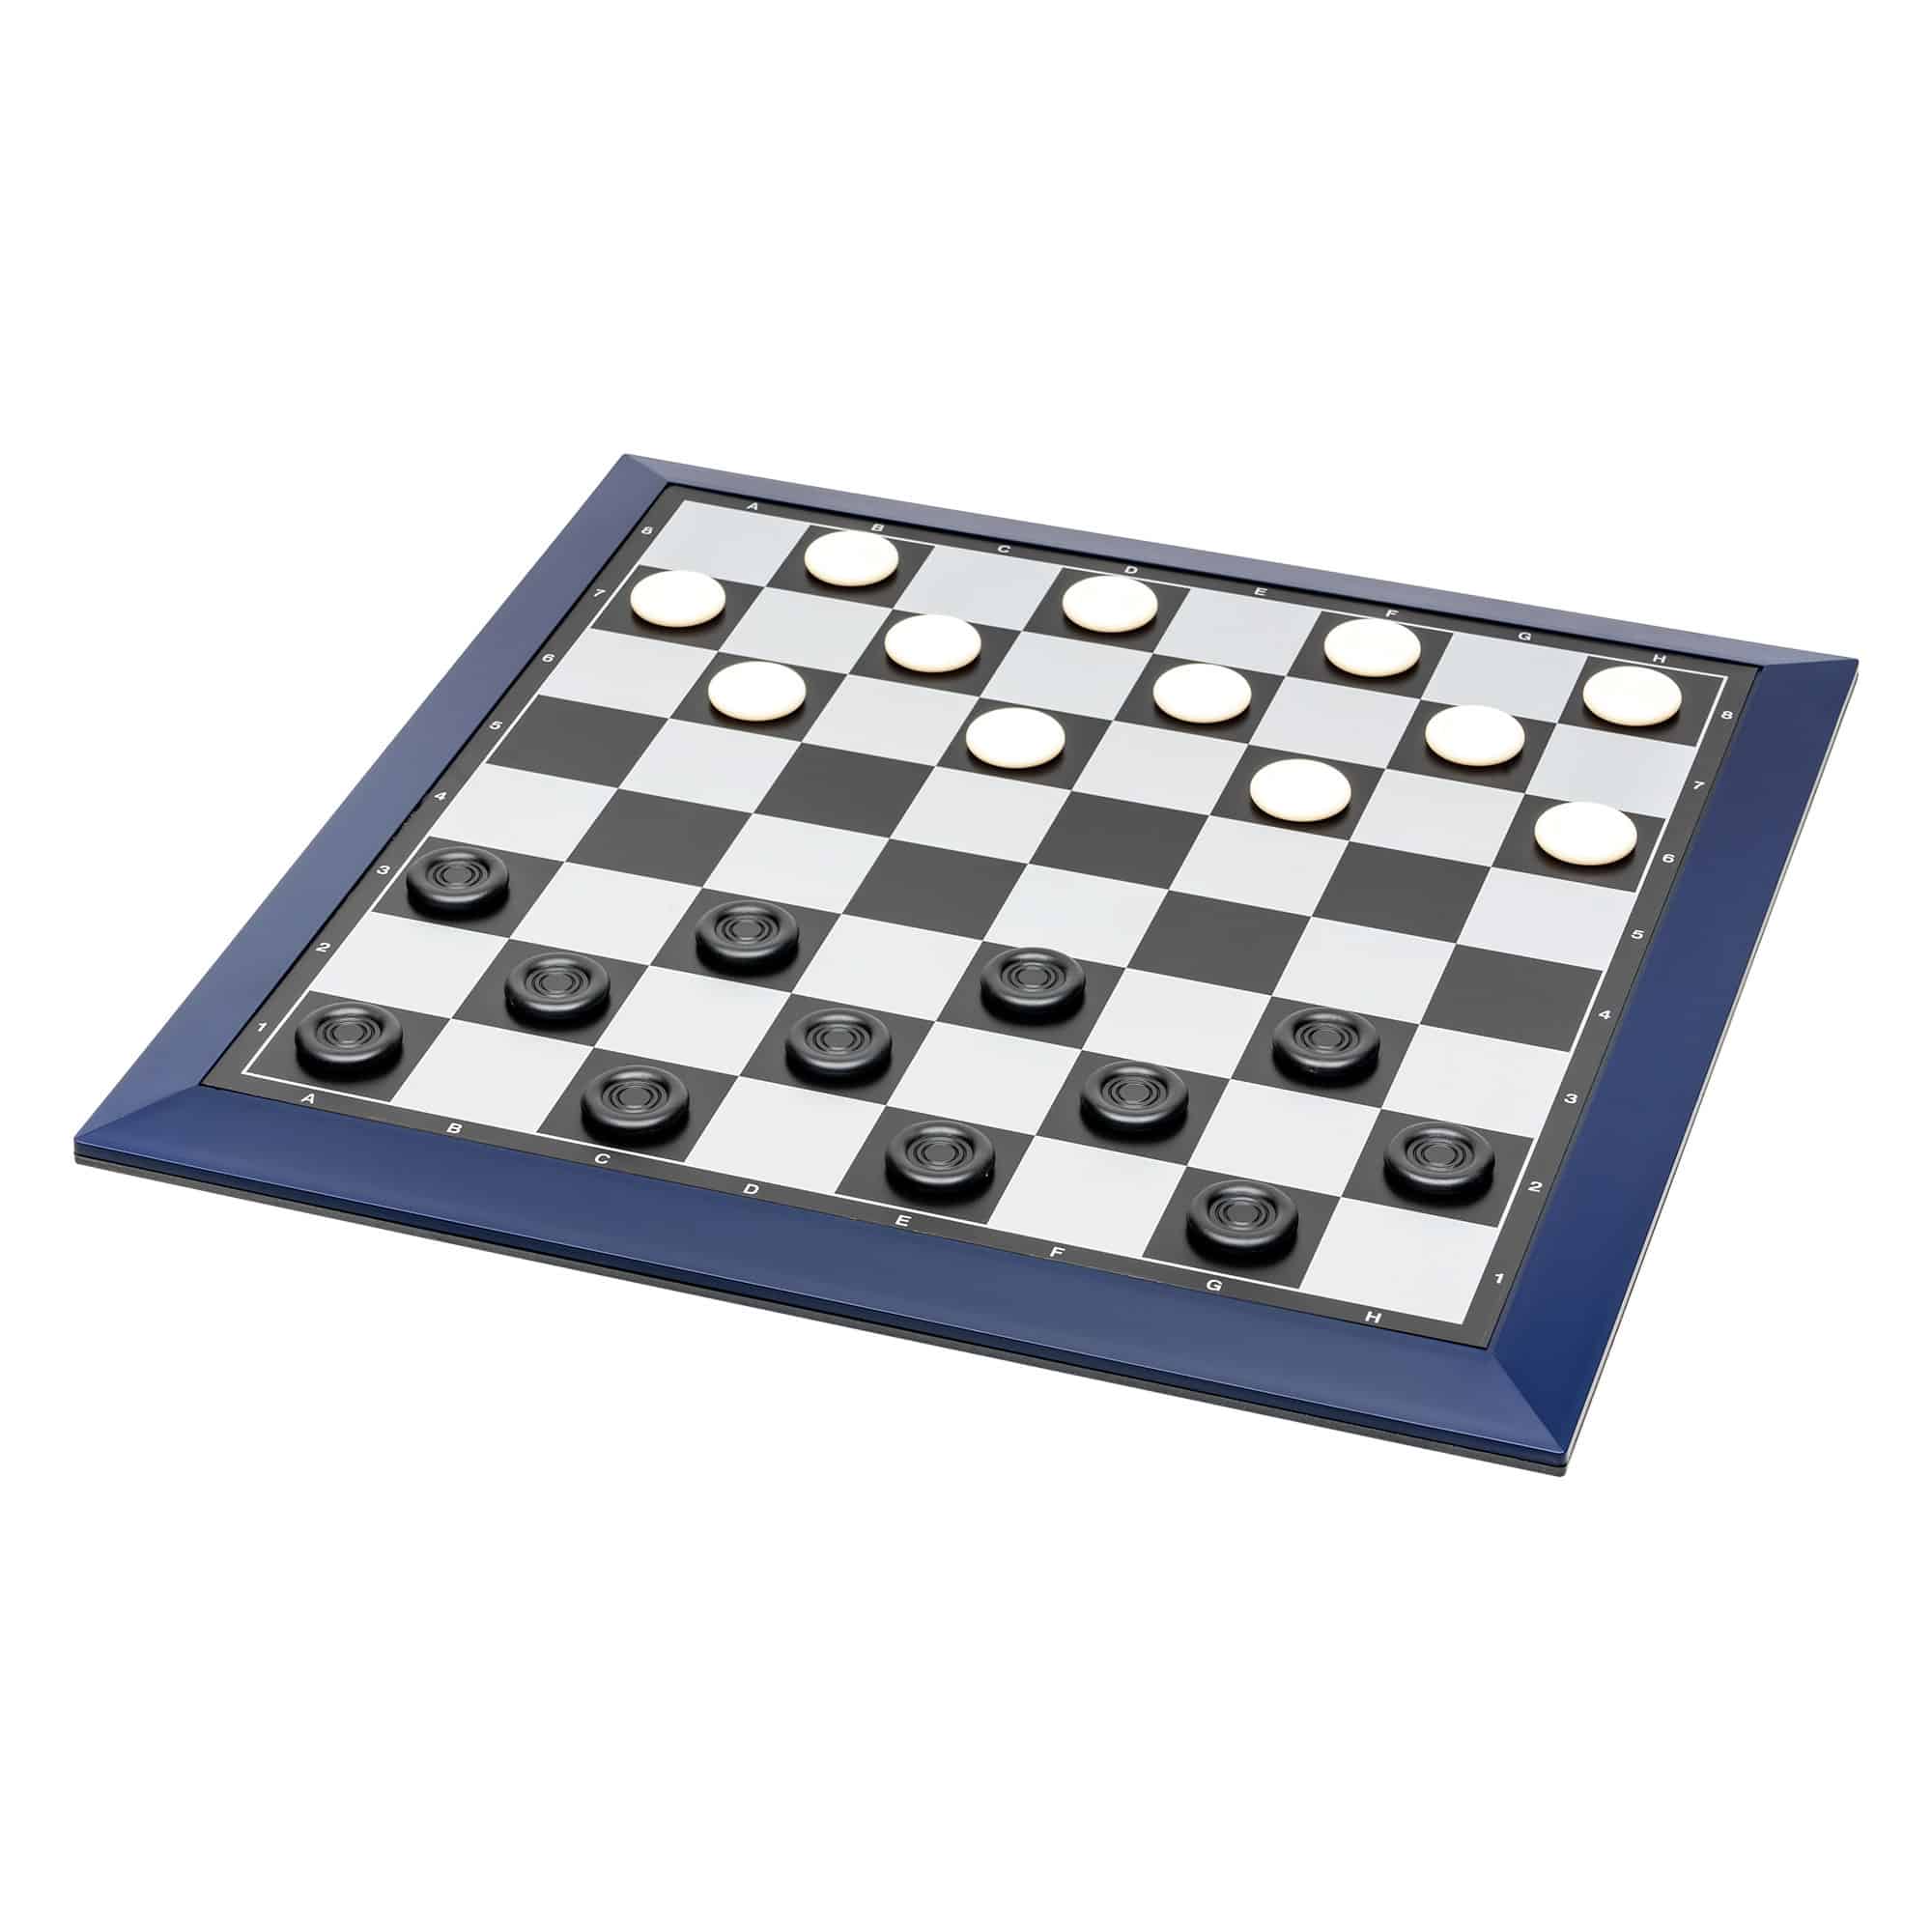 U3 - Magnetic Chess & Checkers Set - Modern